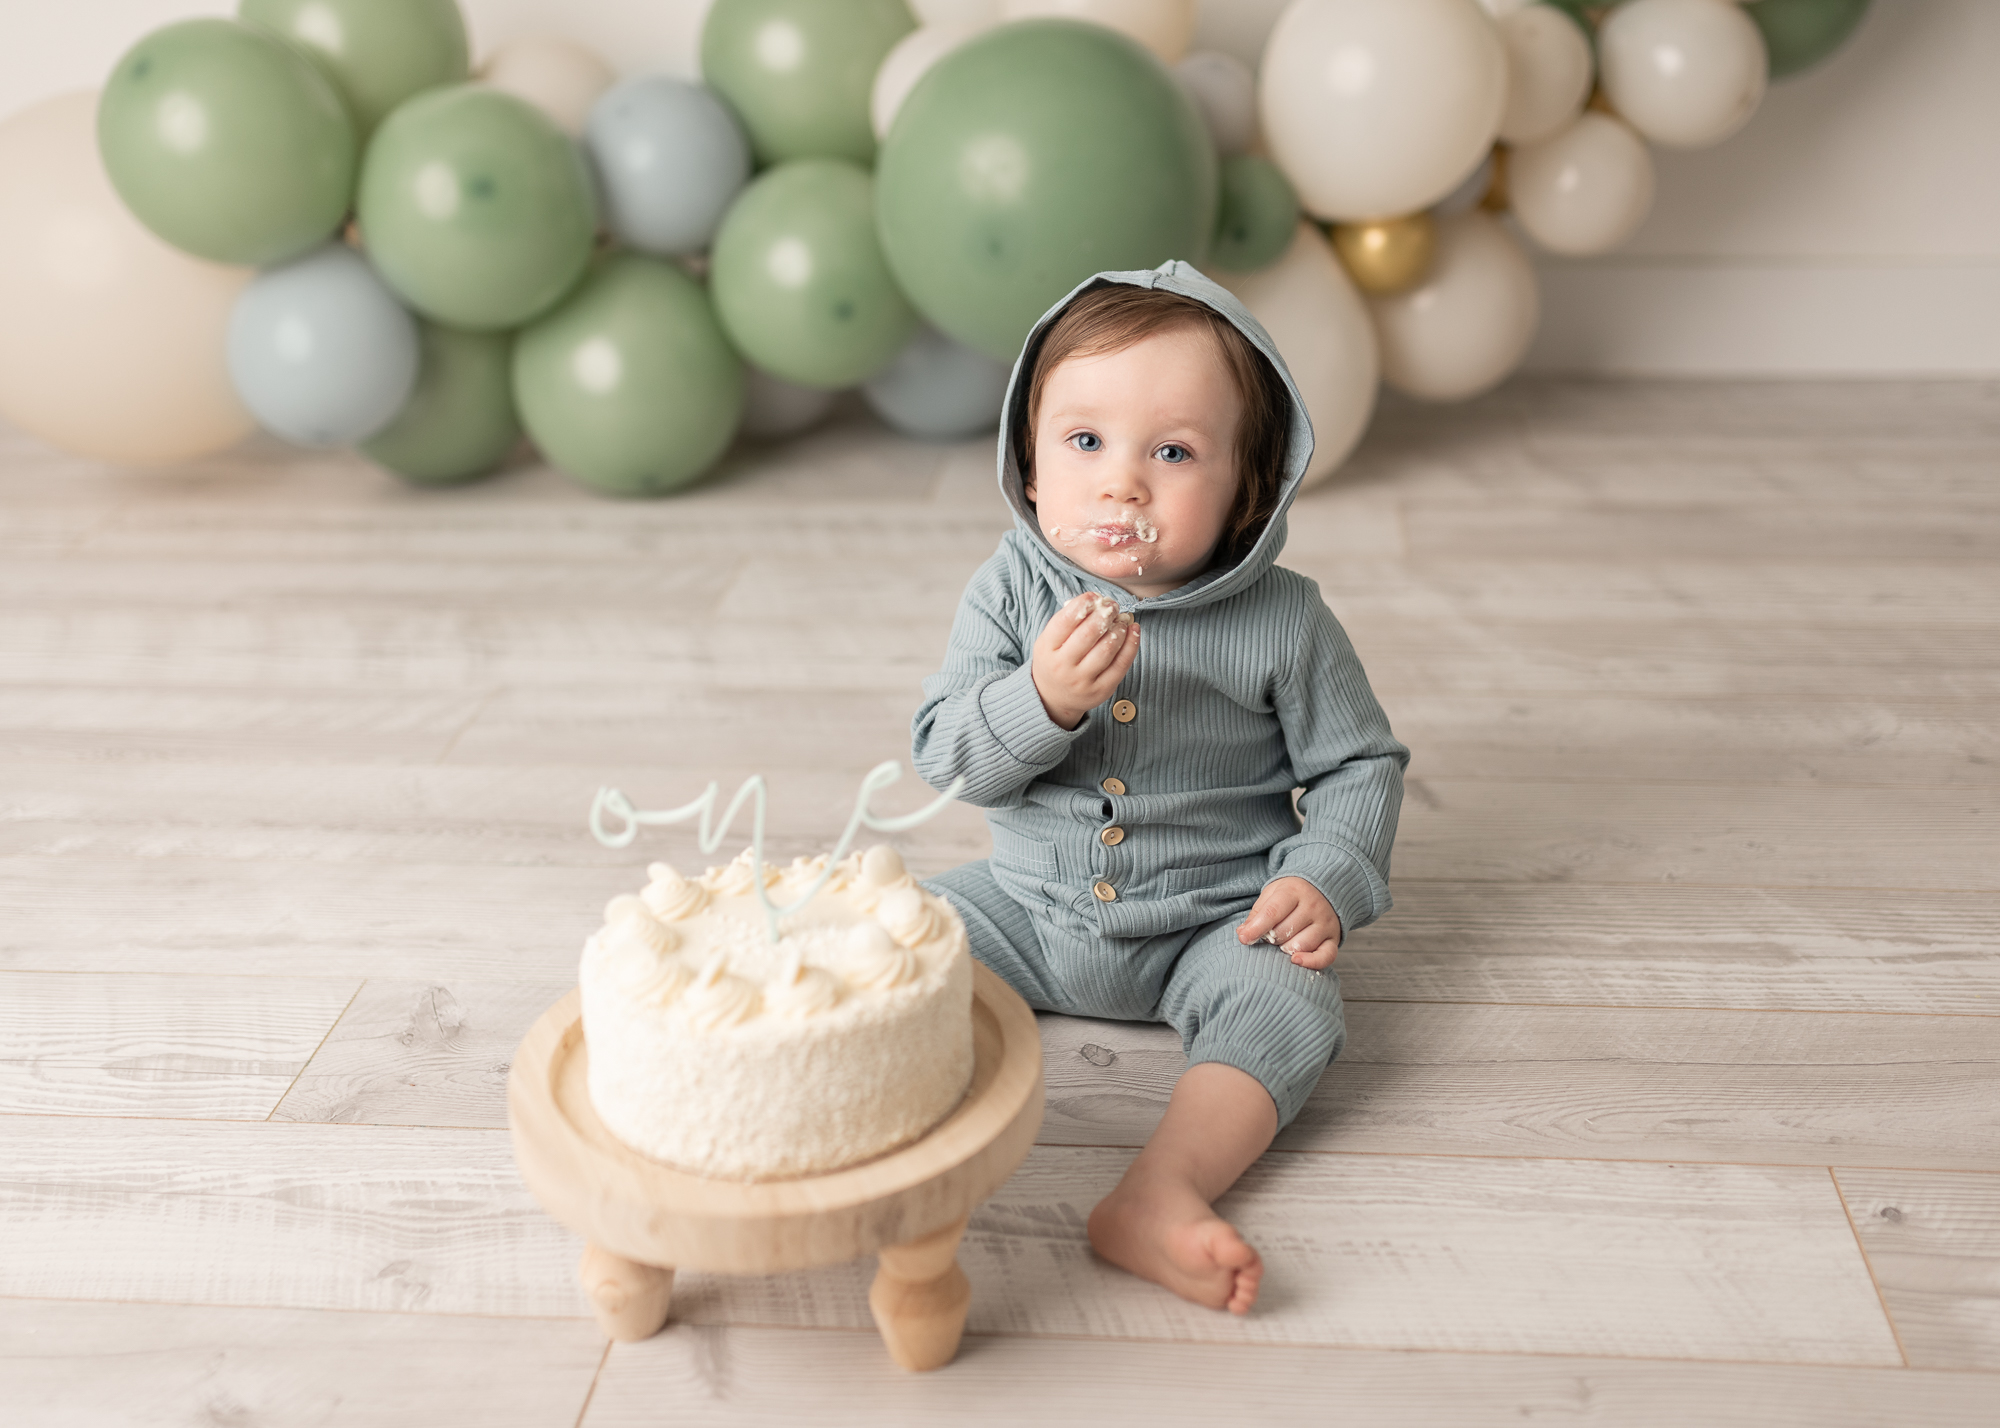 Little boy in a onesie eating cake